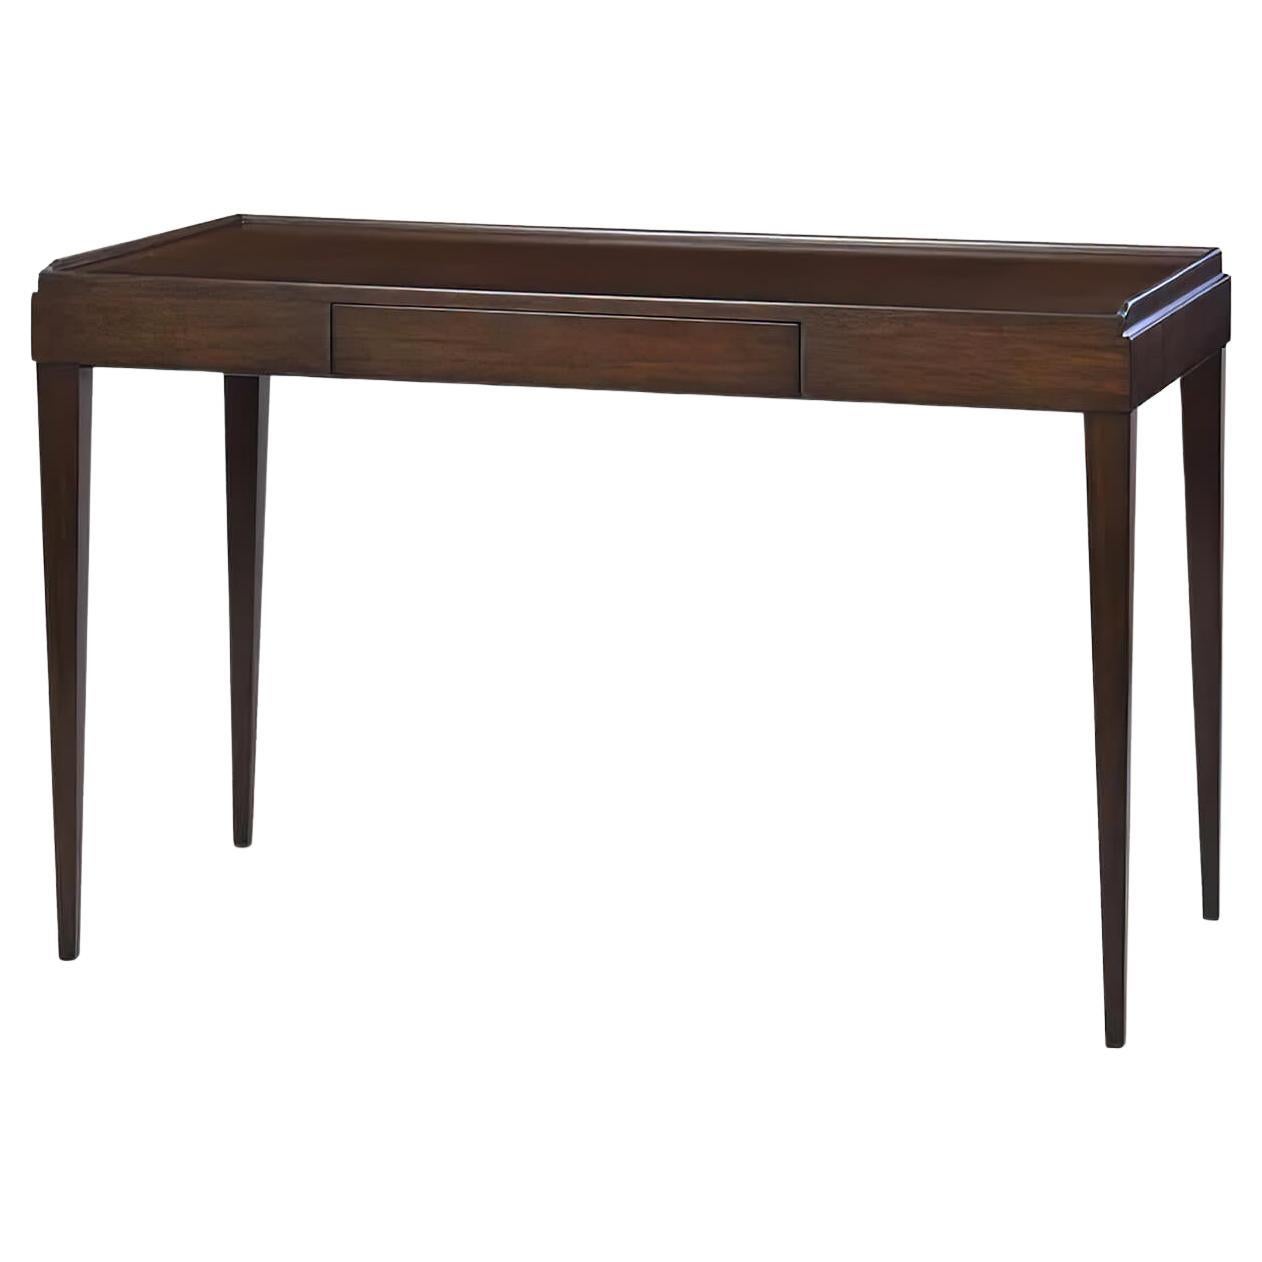 Mid-Century Modern Style Desk, Mahogany Finish For Sale